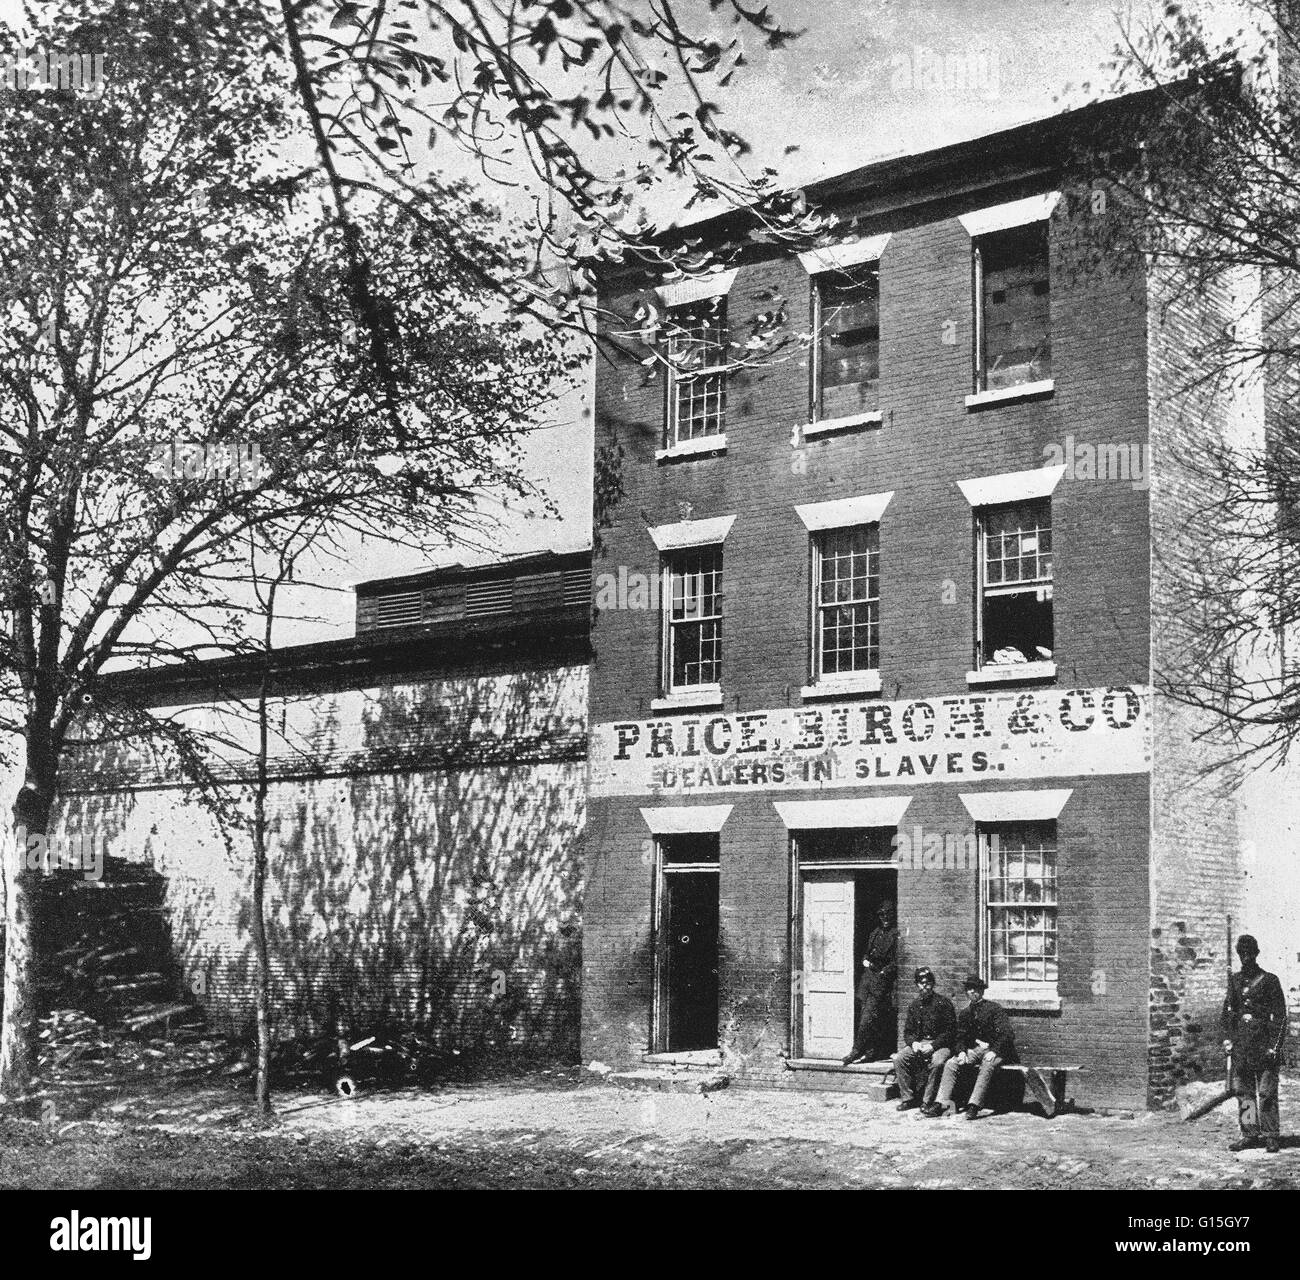 Union Army guard at Price, Birch & Co. slave pen on Duke Street in Alexandria, Virginia, circa 1865. Stock Photo